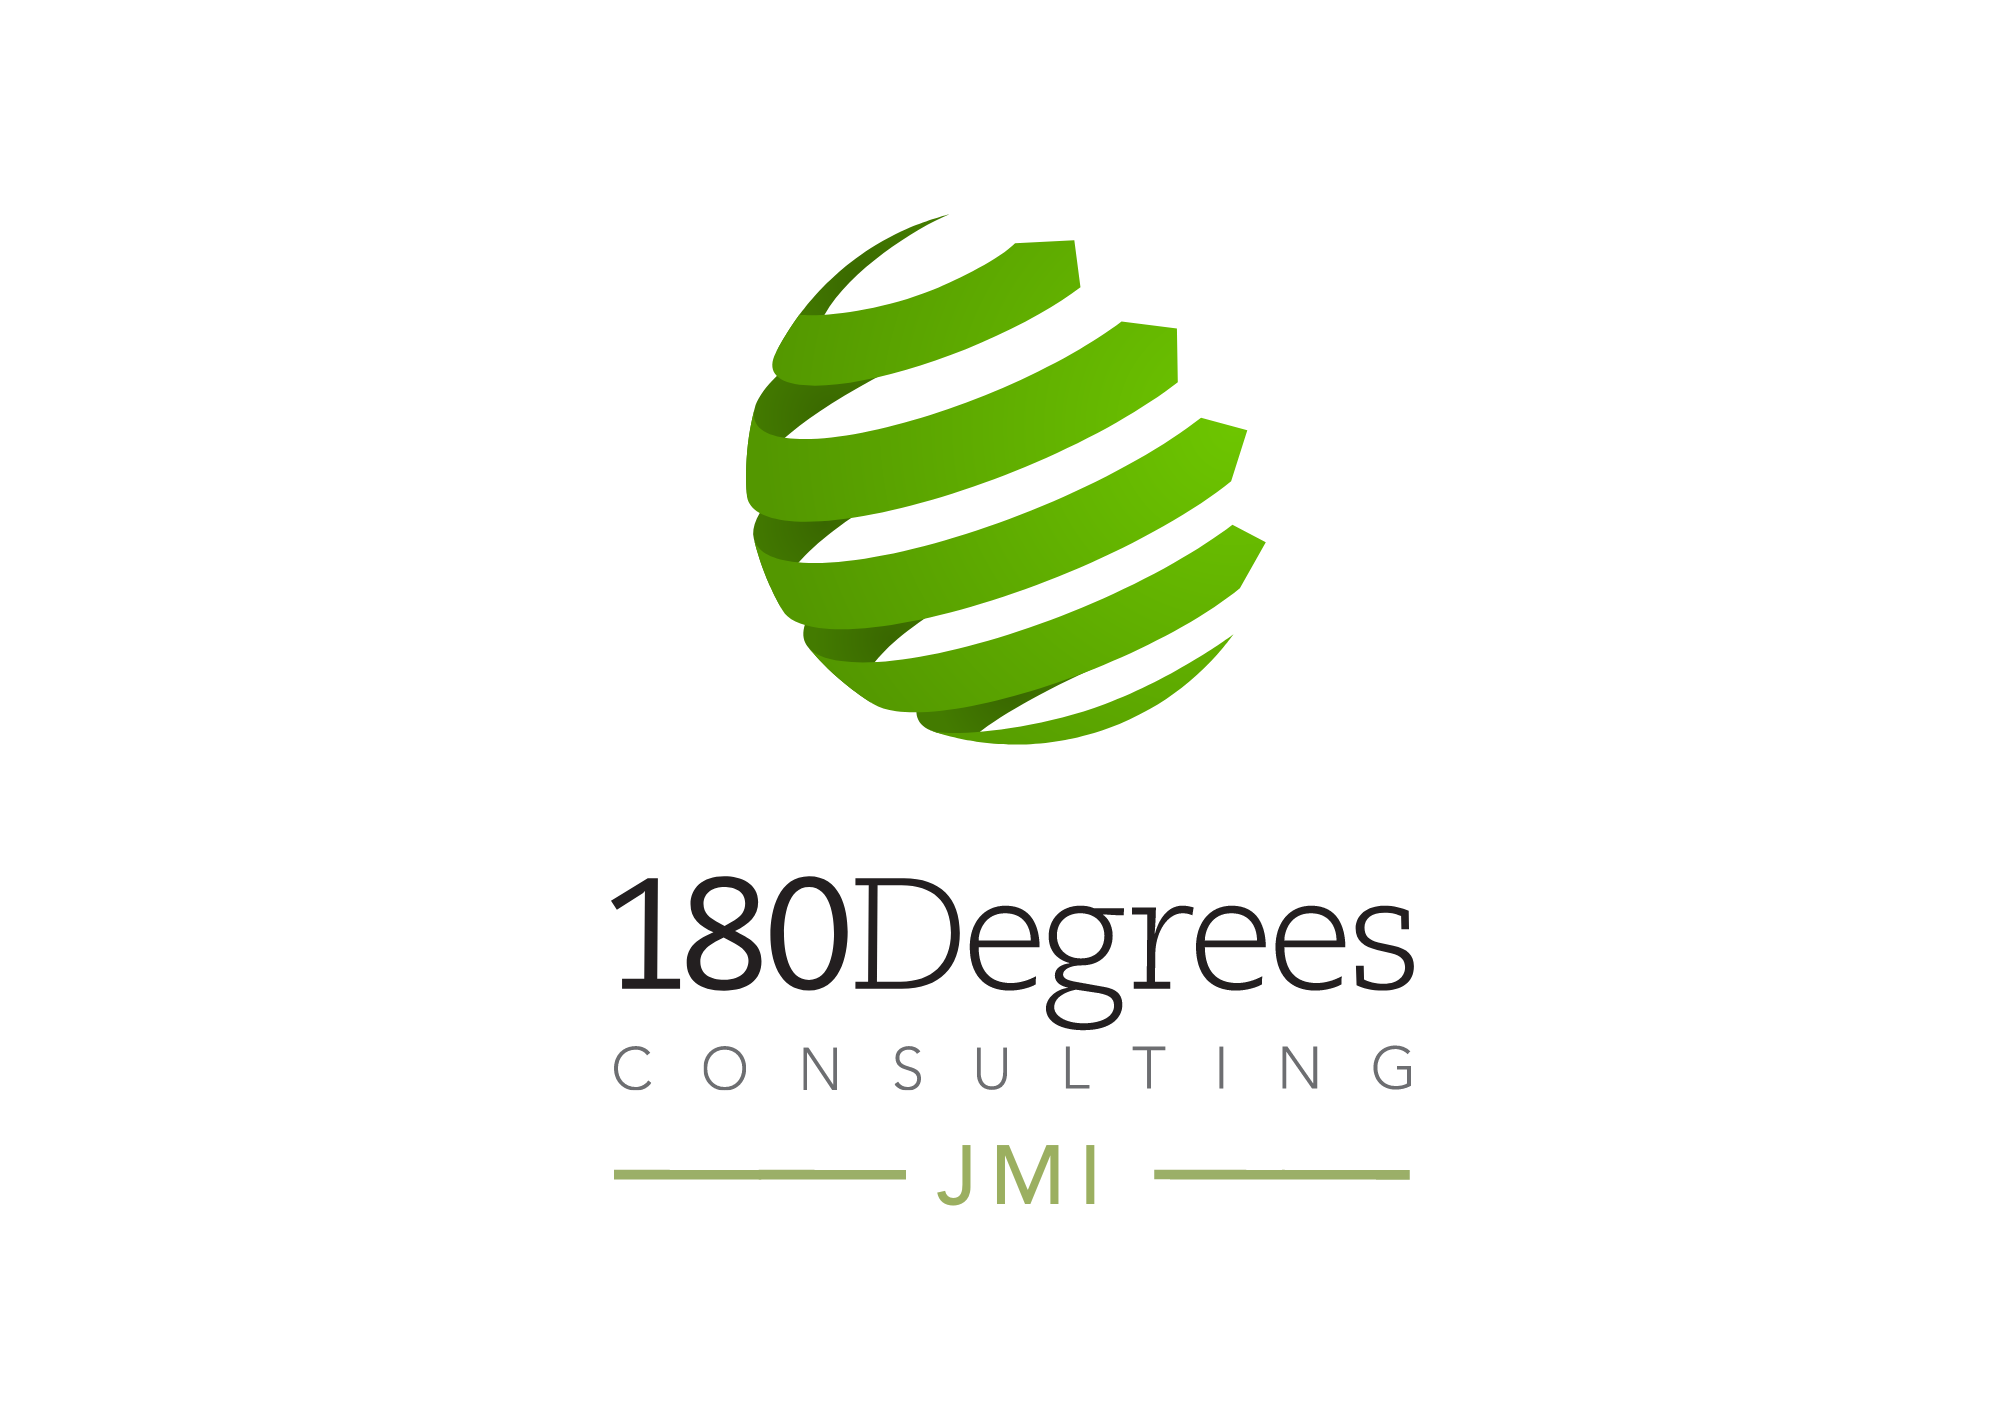 180 Degrees Consulting JMI